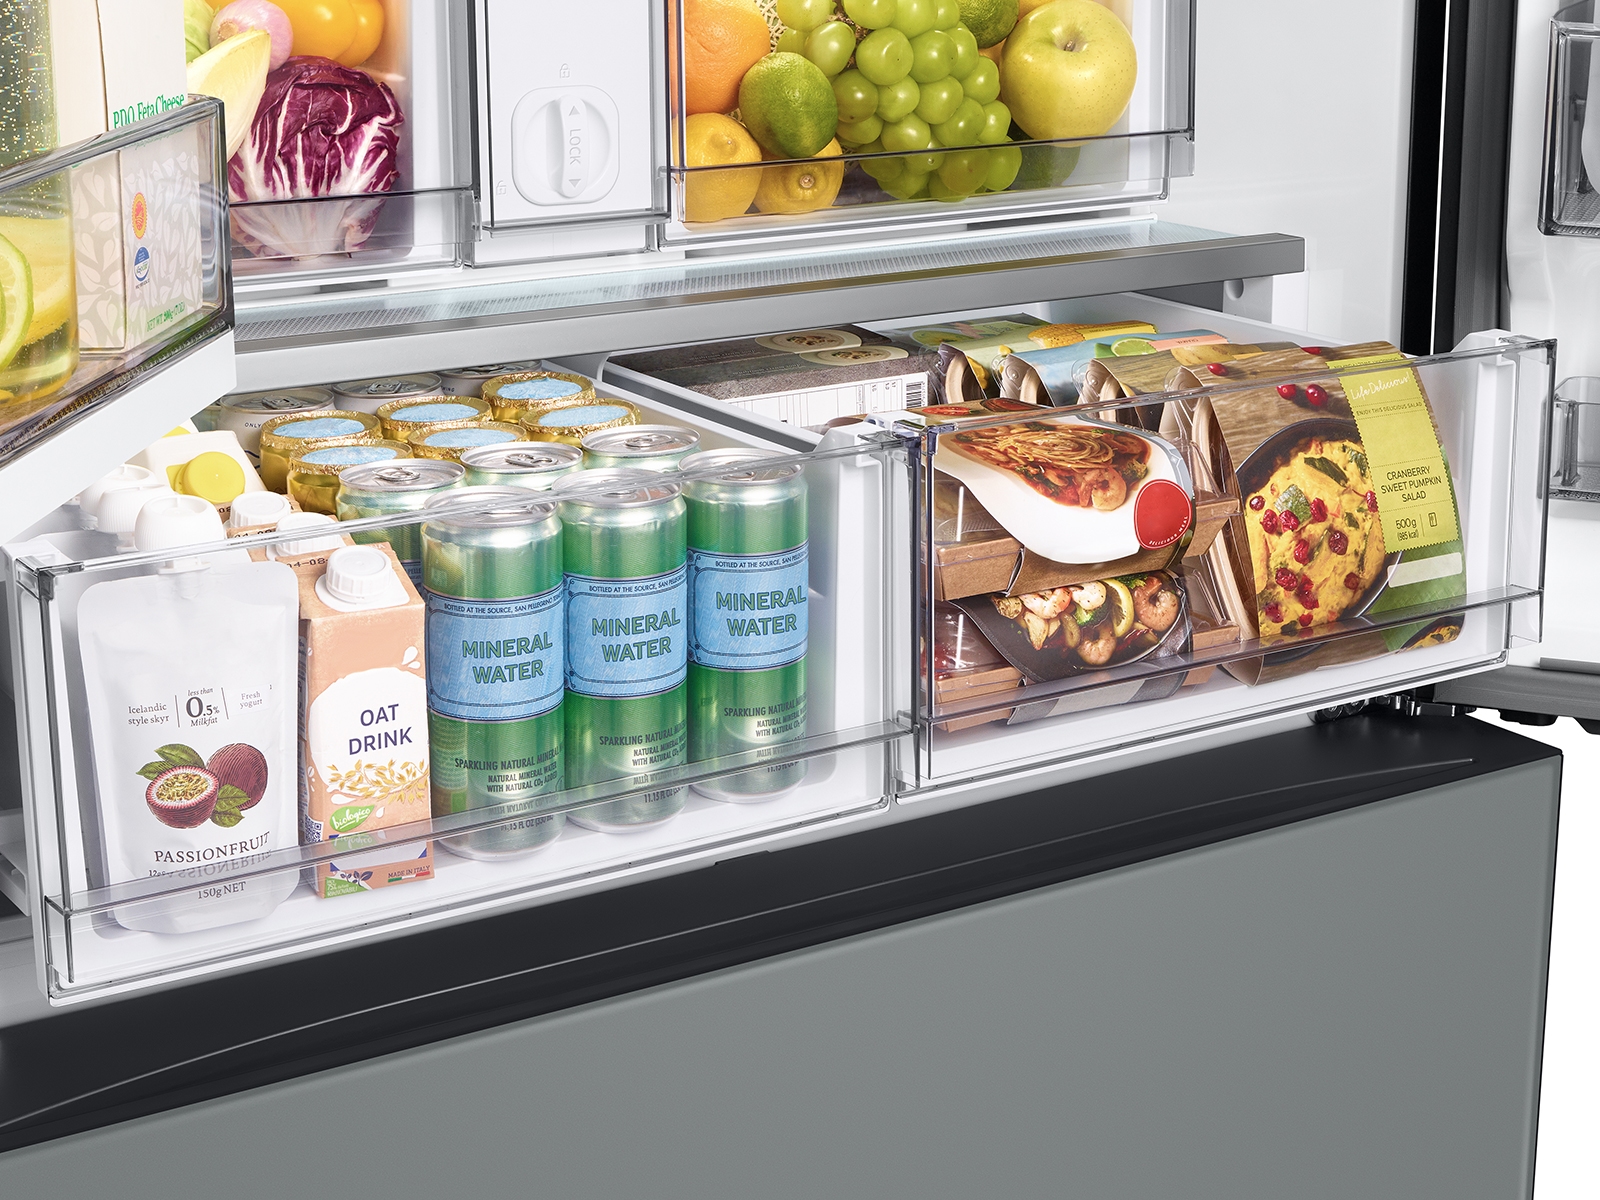 Tips for an organized Samsung refrigerator